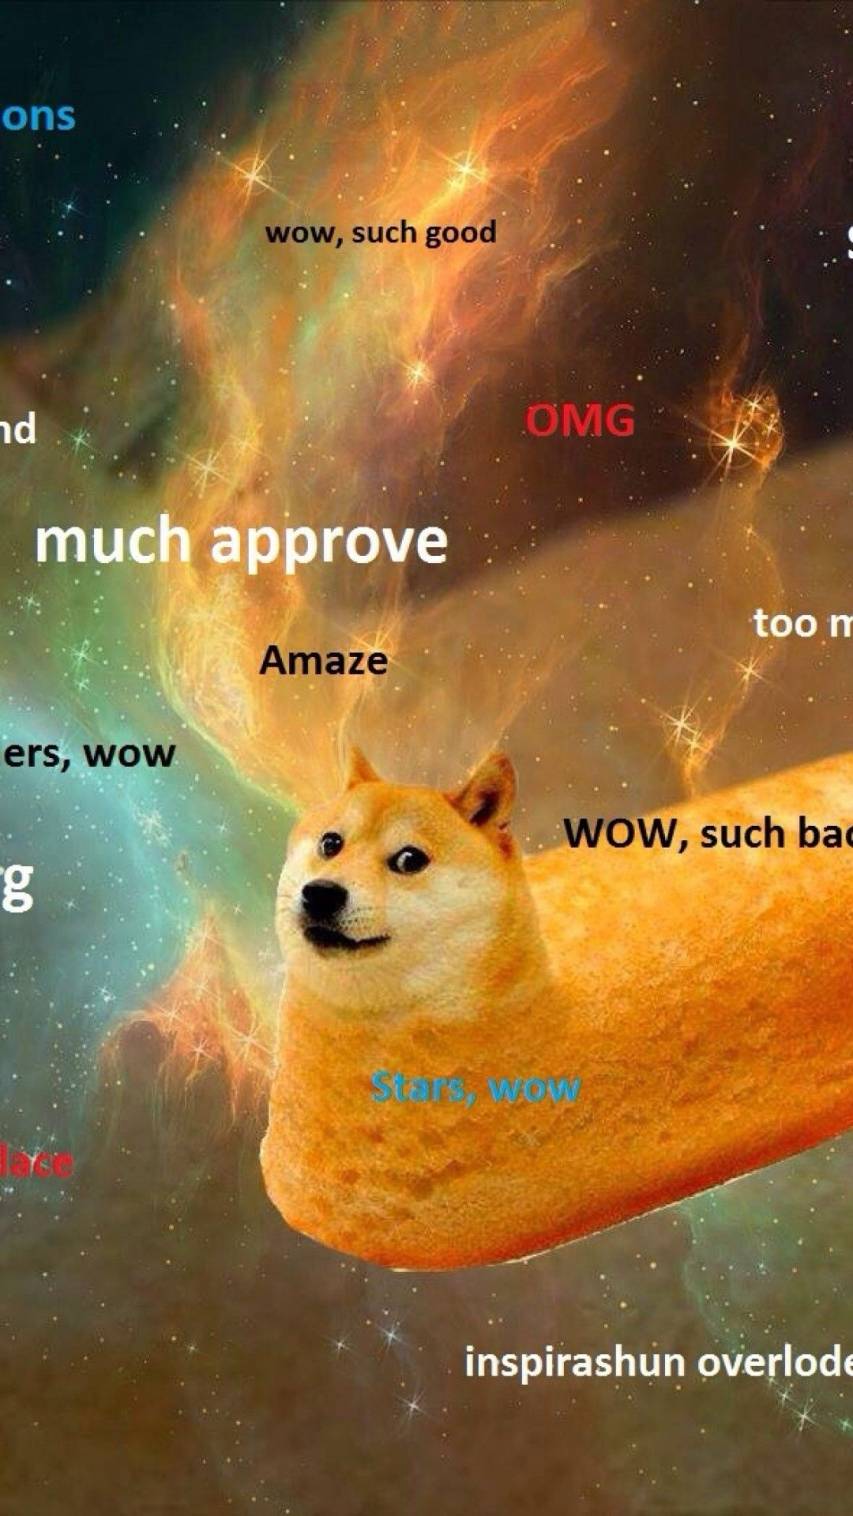 Cool Doge meme HD Wallpapers | Free Download